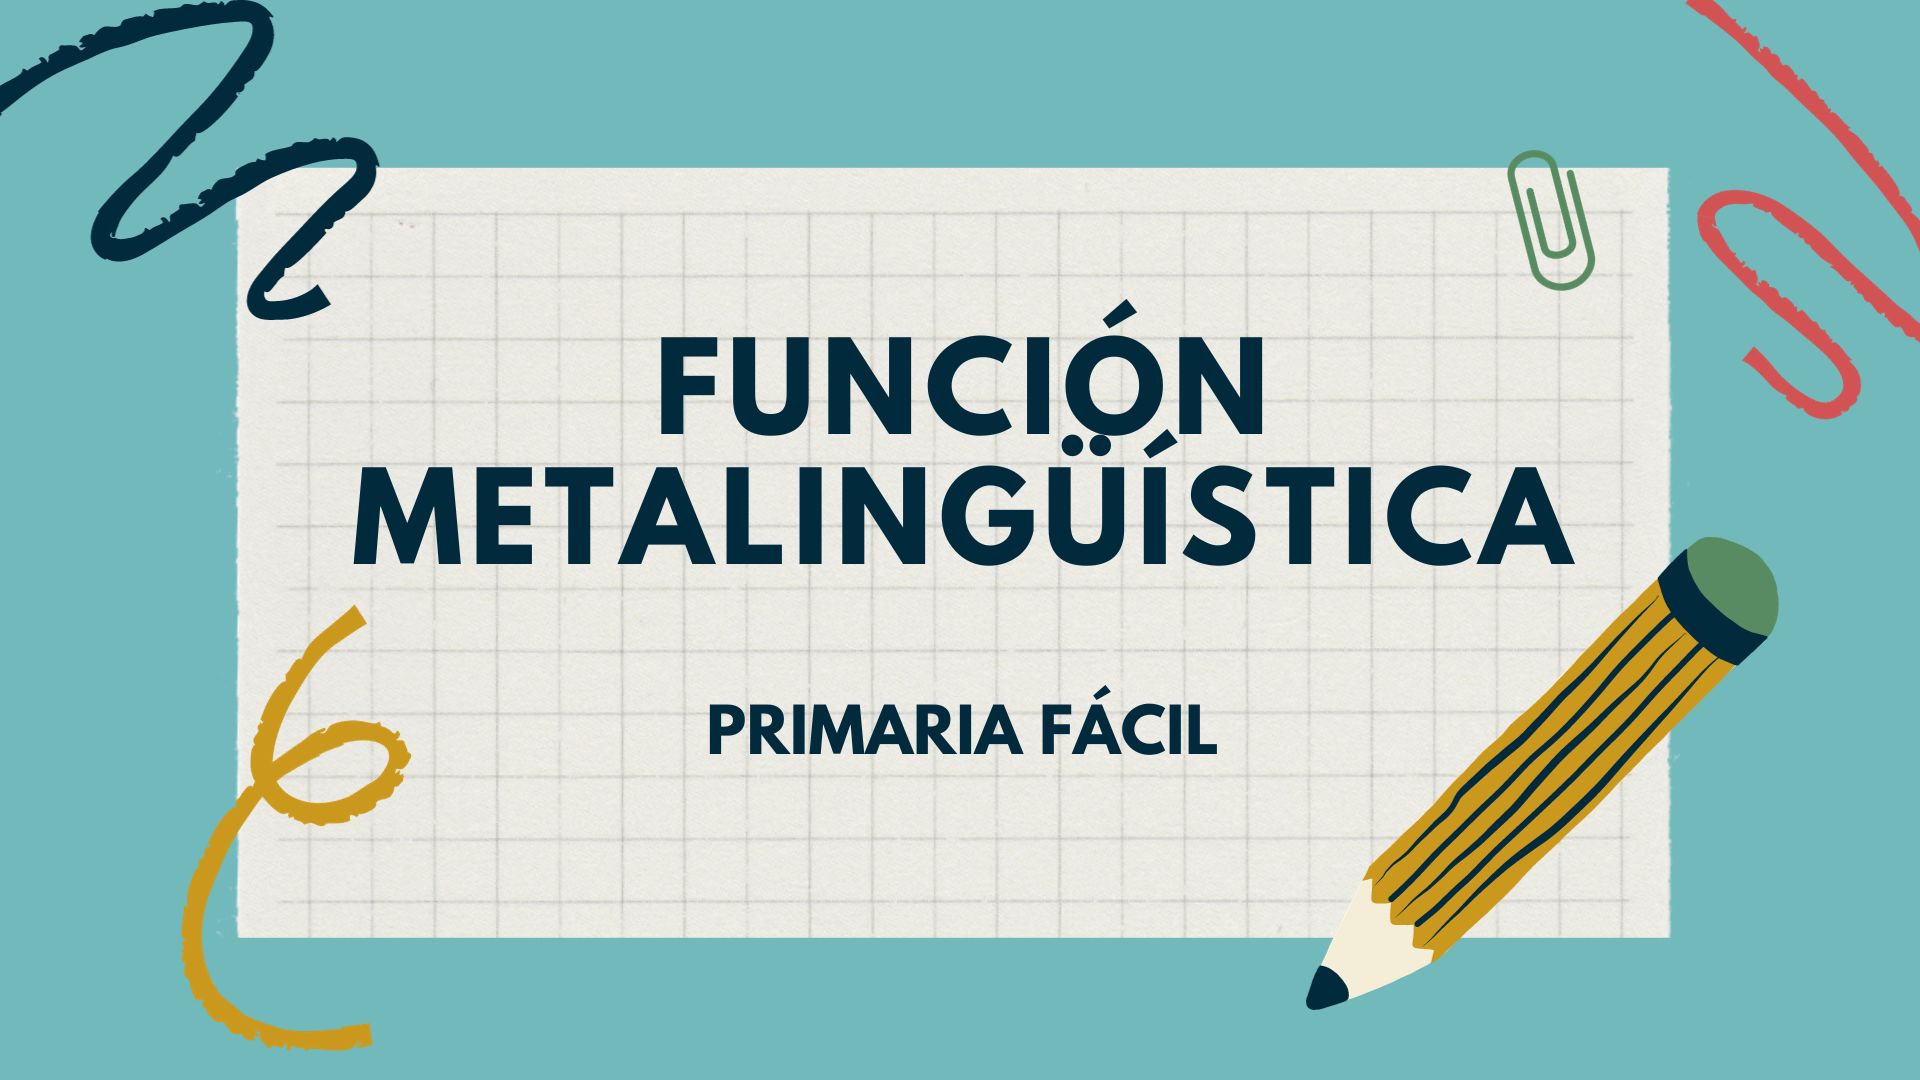 Funcion metalinguistica ejemplos